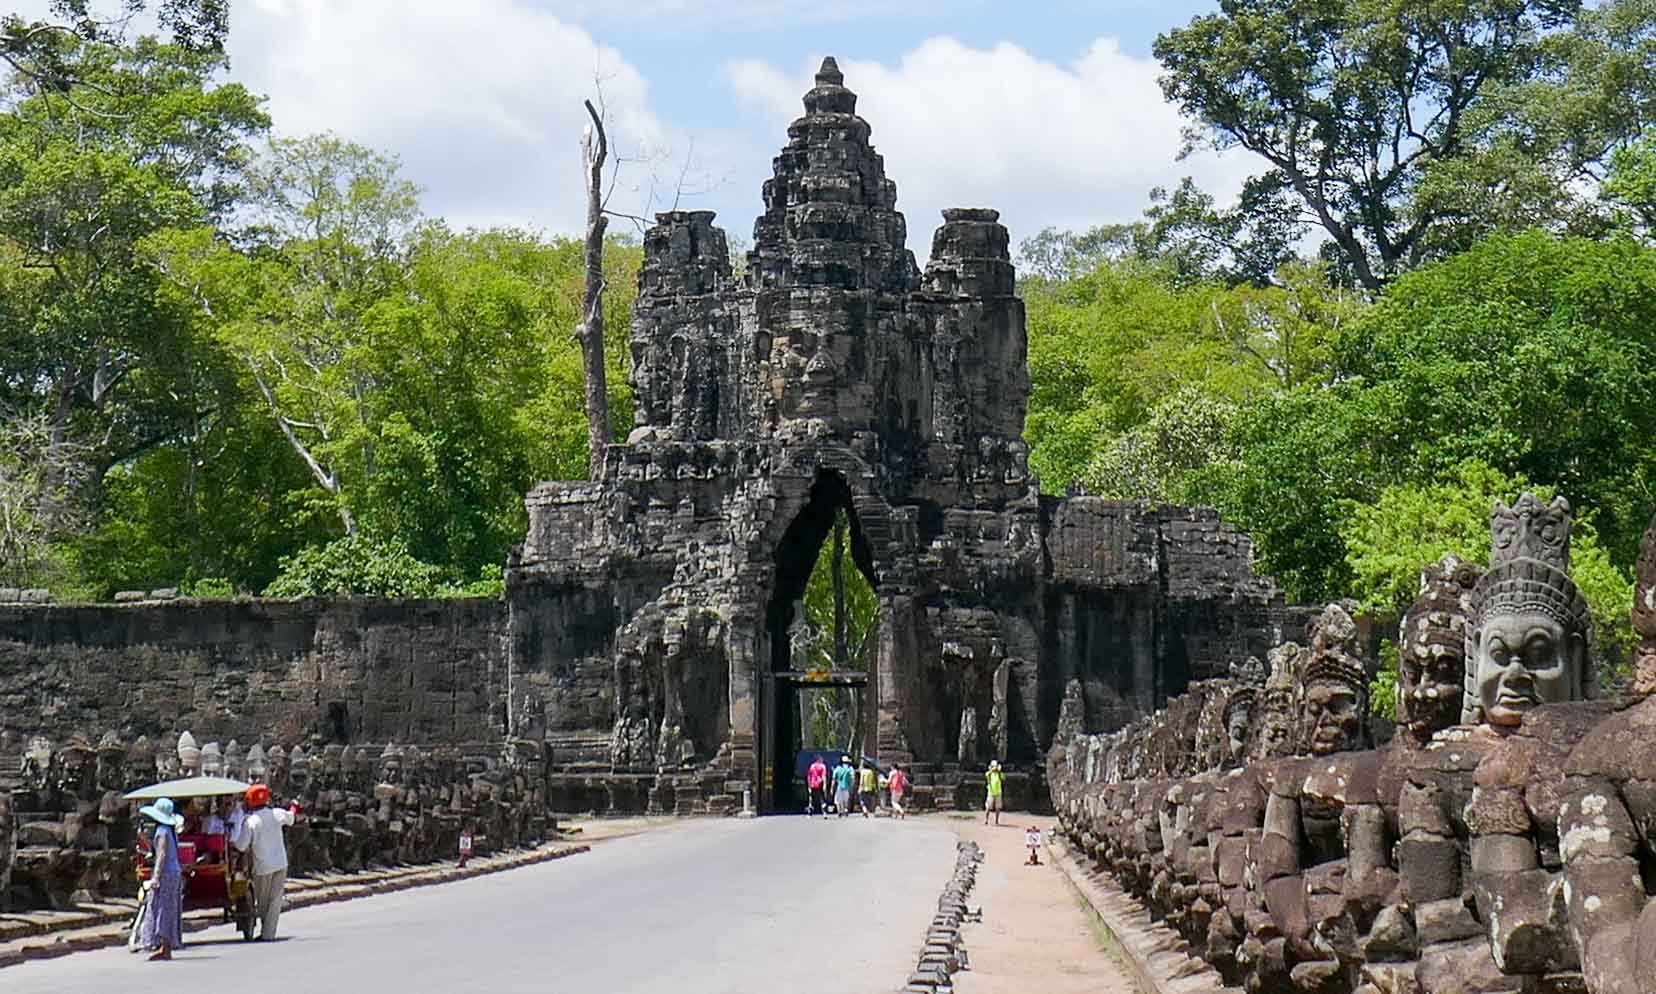 South gate Angkor Thom